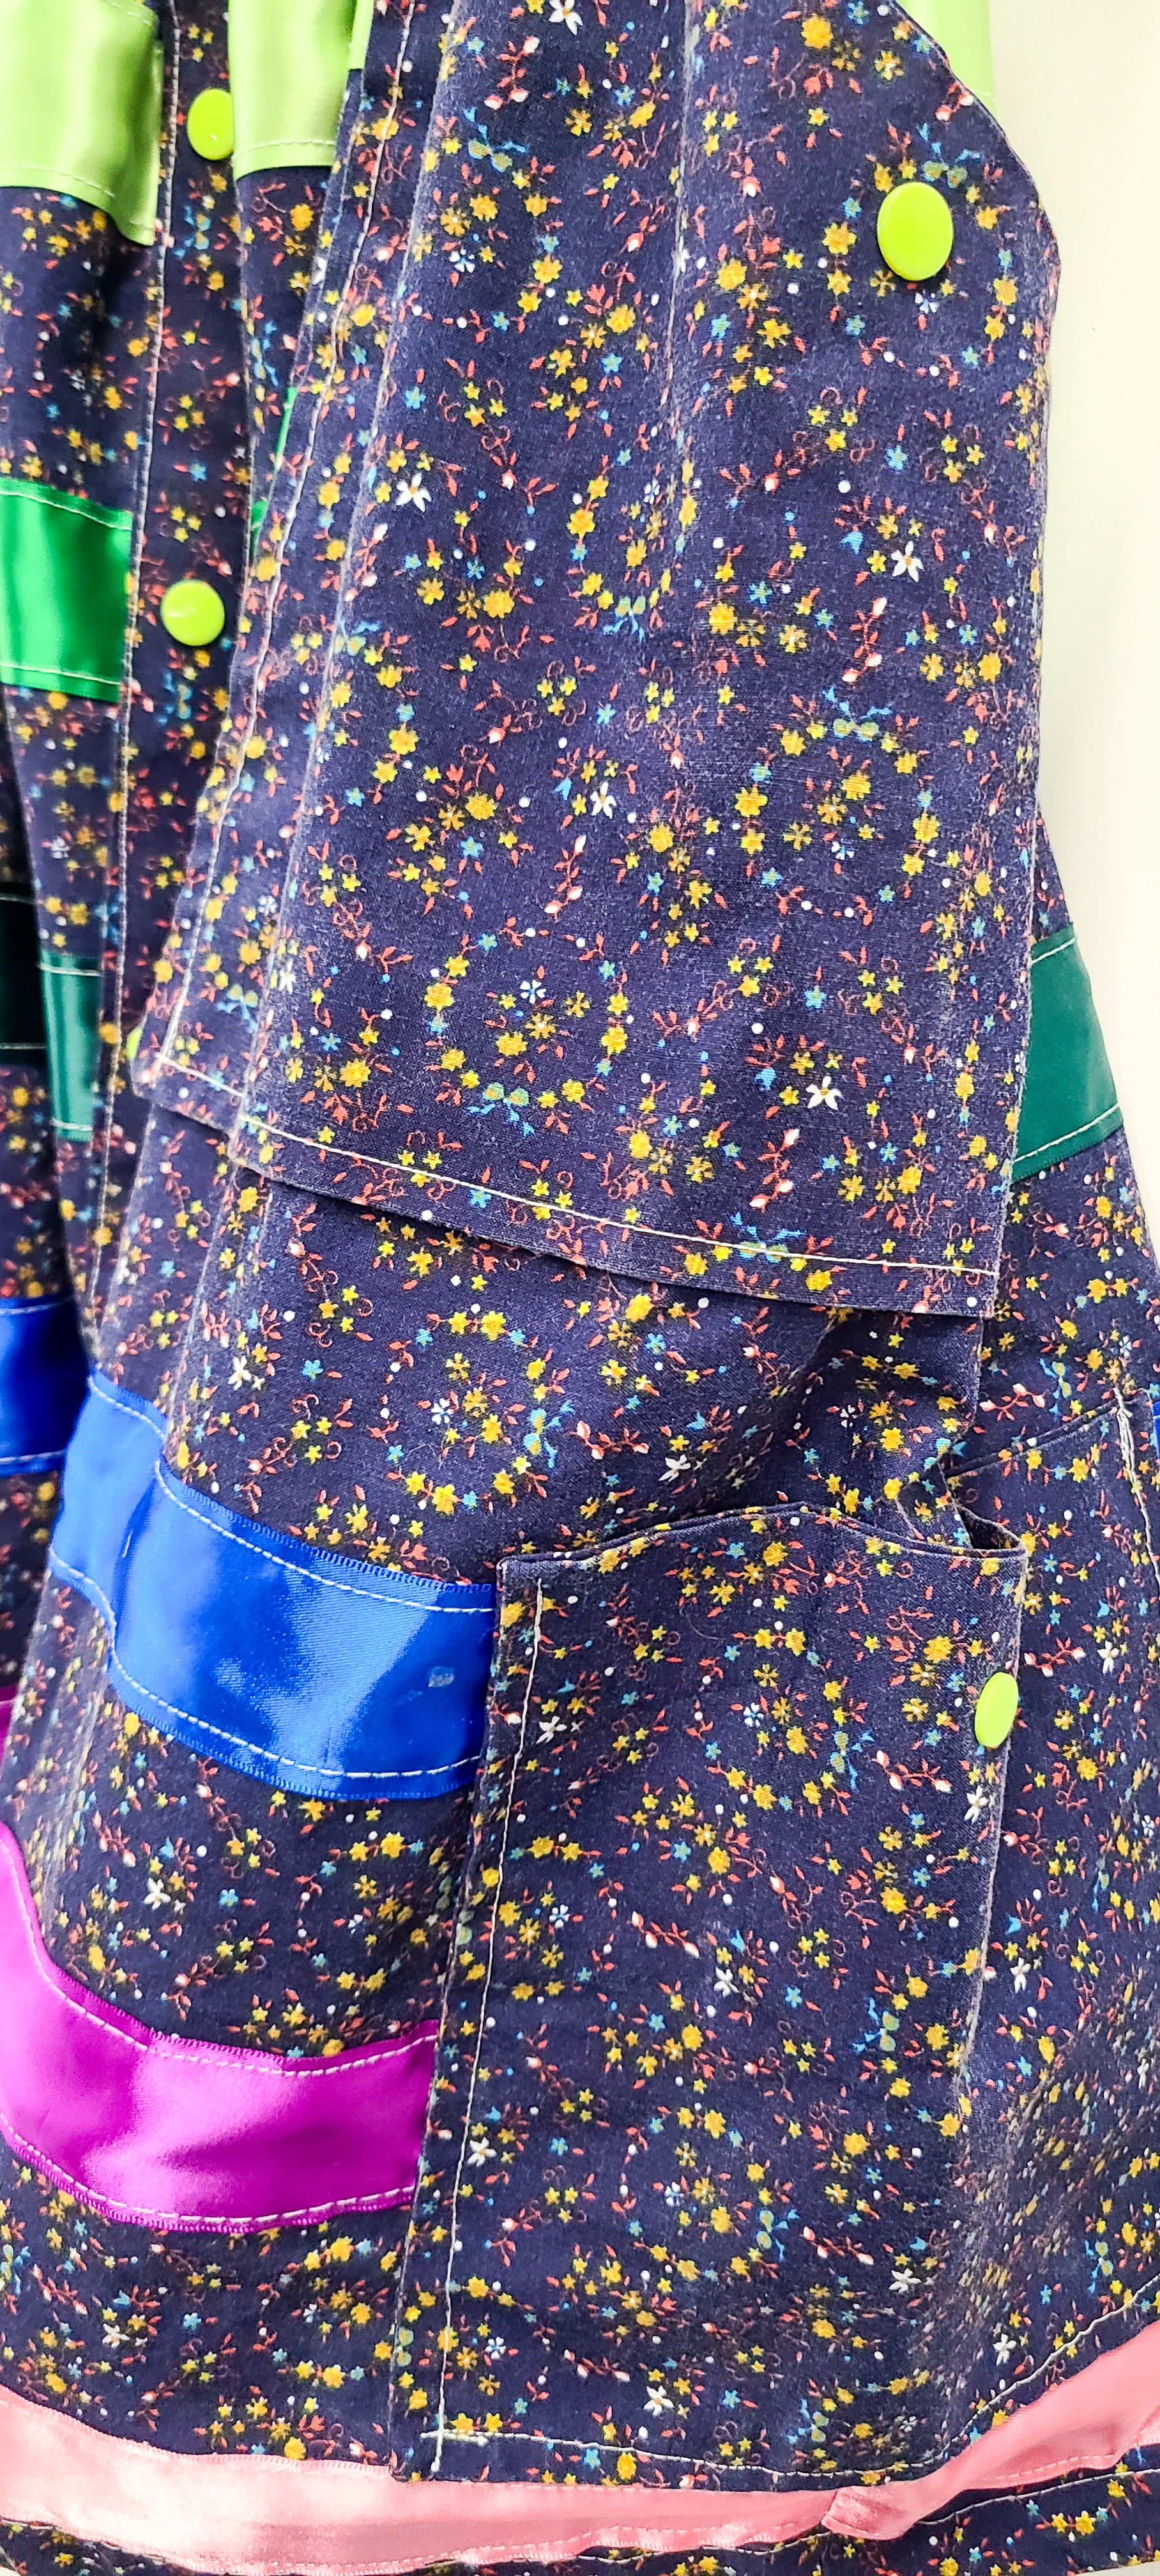 Crystal Bull Handmade Kid's Ribbon Skirt Navy Floral